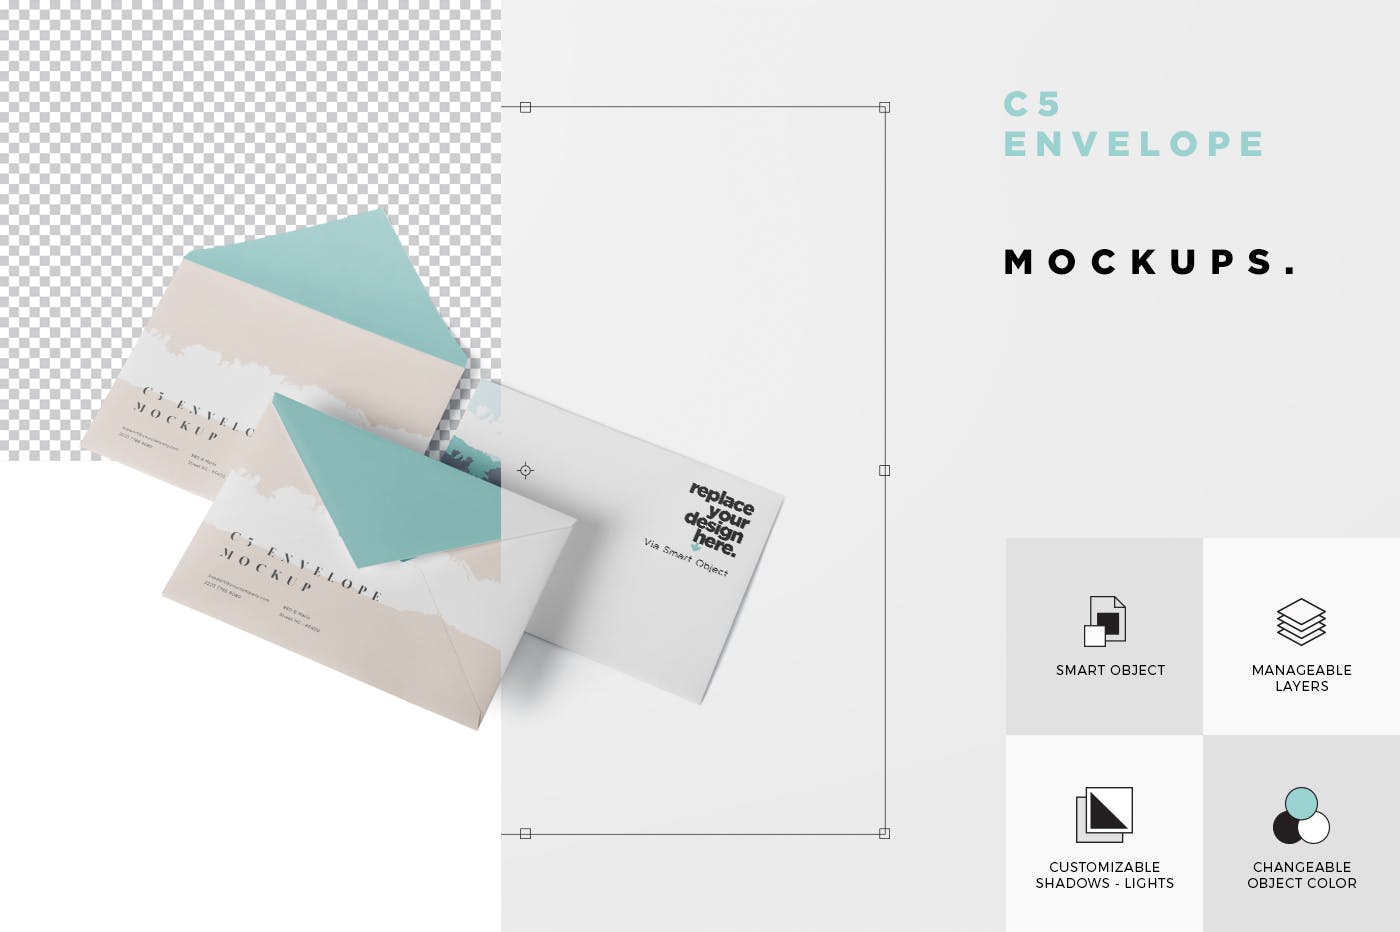 C5规格企业信封设计效果图16设计网精选 Envelope C5 Mock-Up Set插图(5)